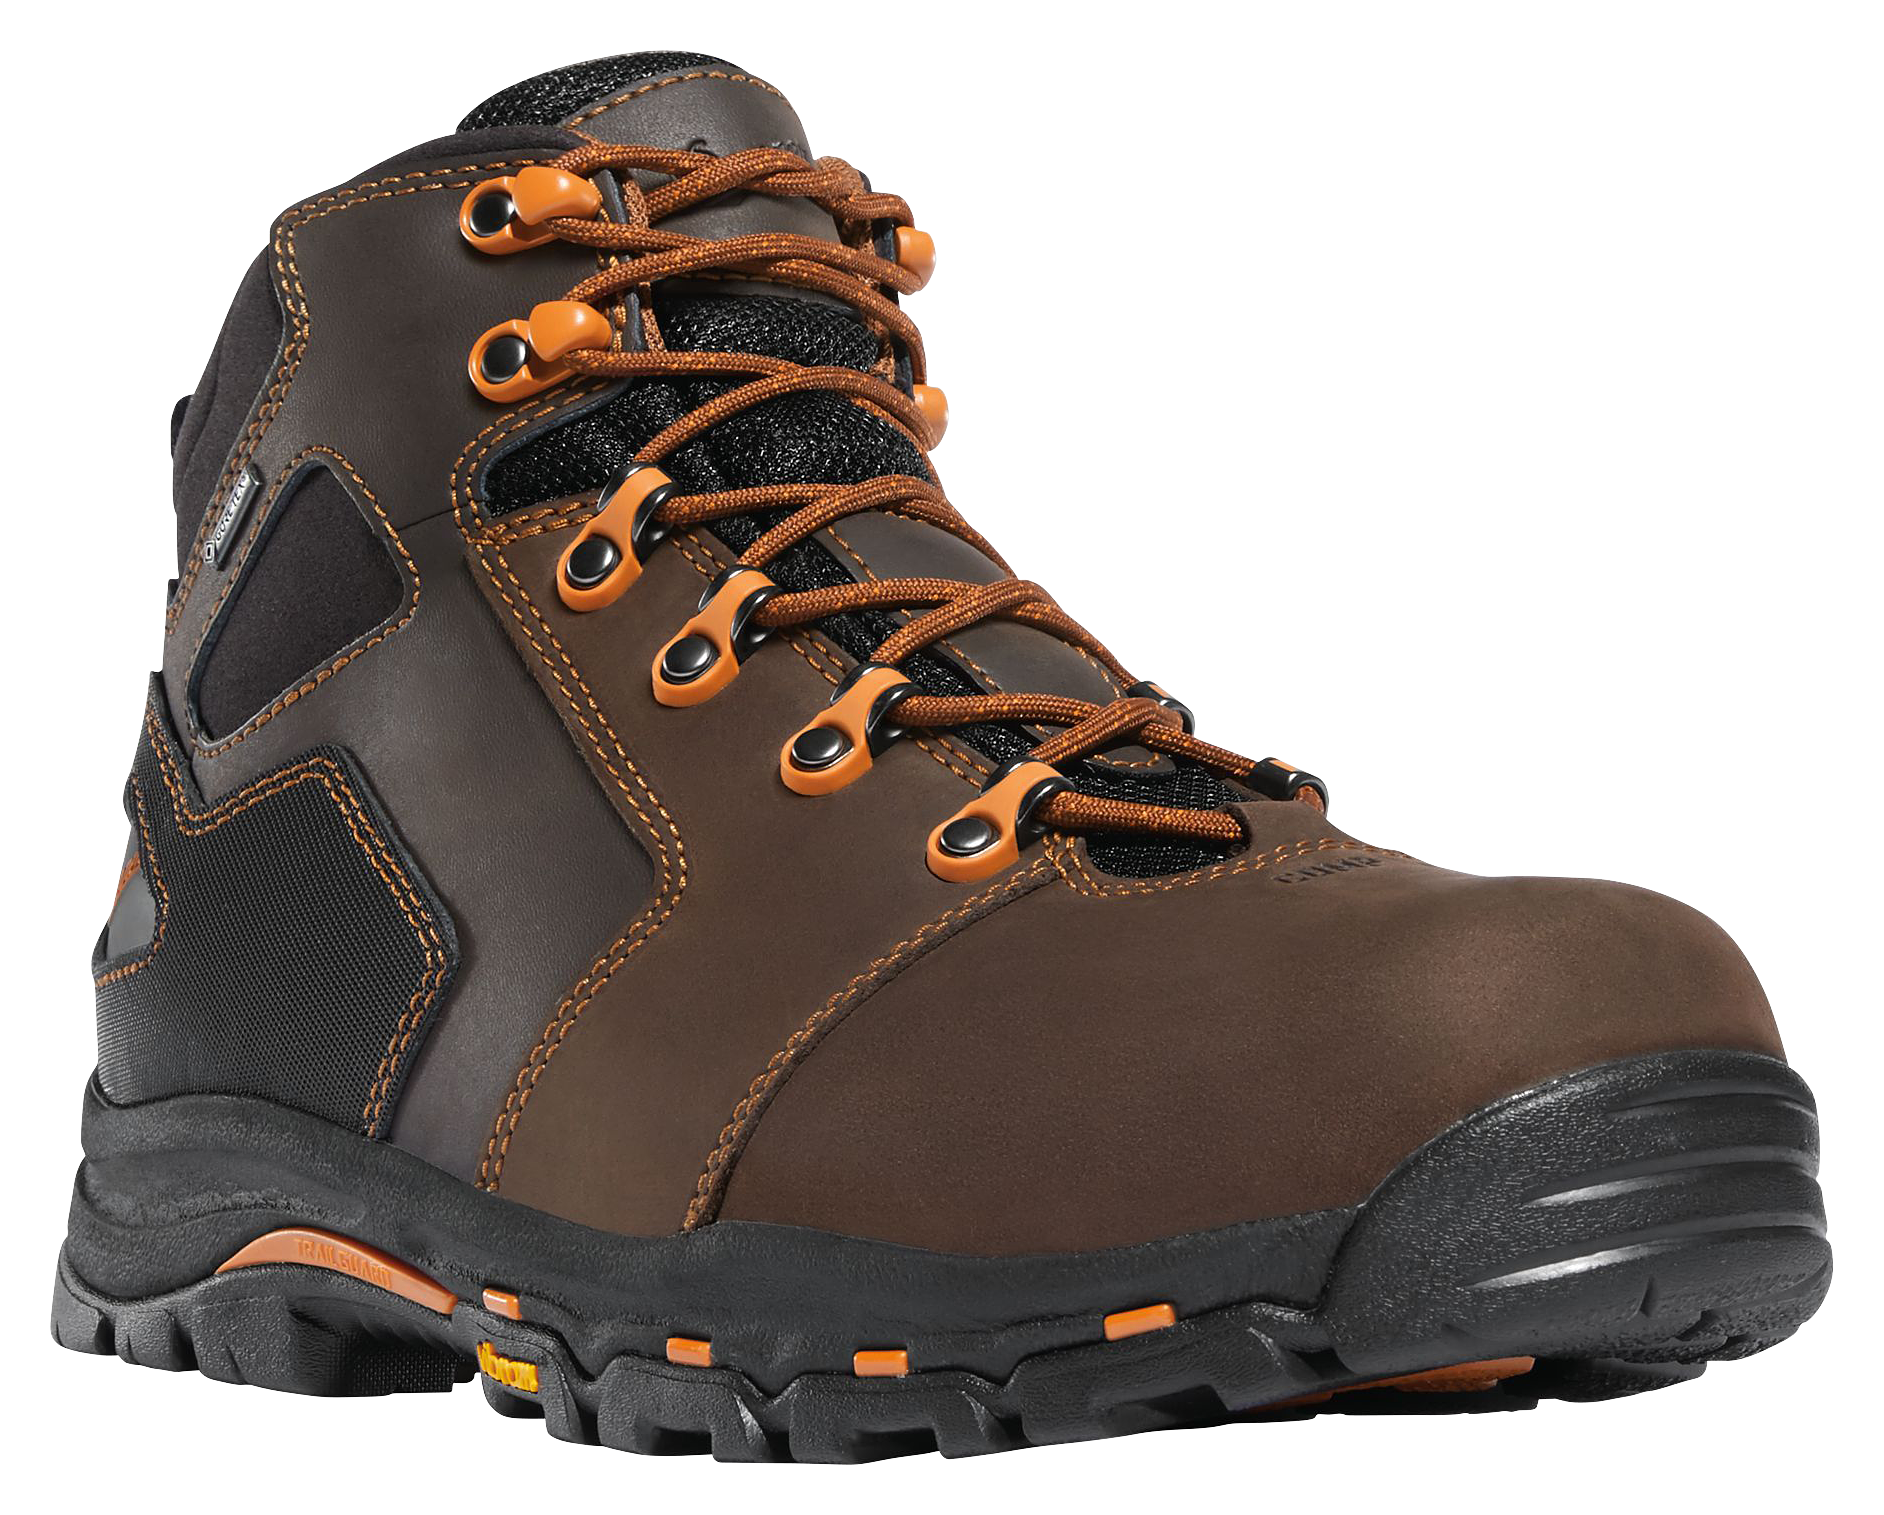 Danner Vicious 4.5'' GORE-TEX EH Work Boots for Men - Brown/Orange - 14M